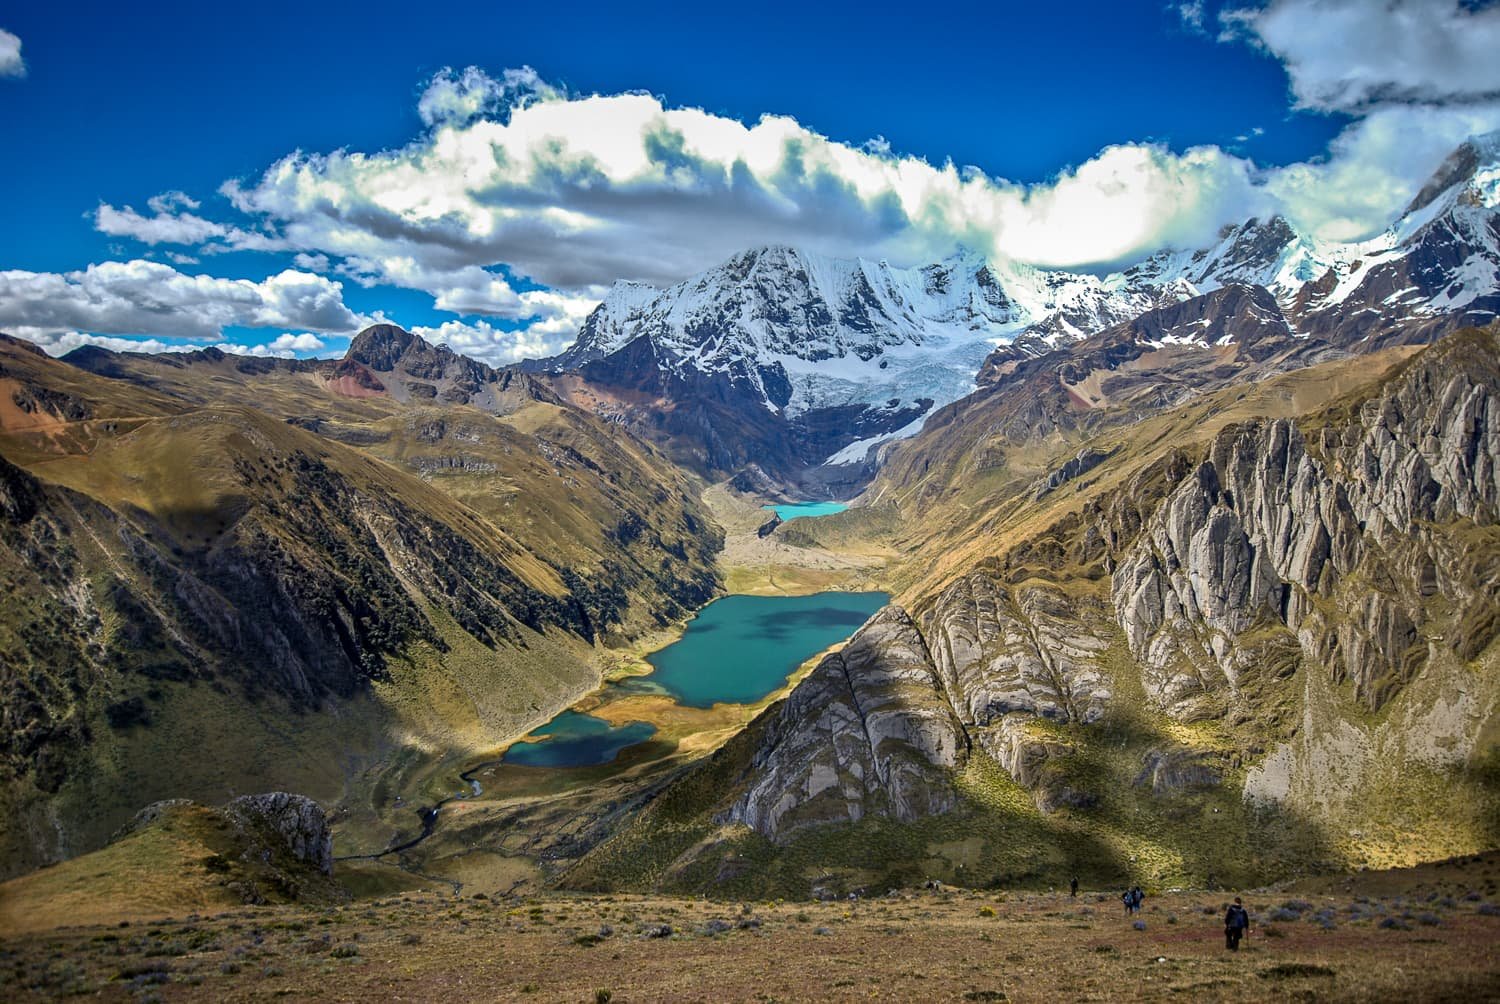 Luxury Bolivia Travel Visit Bolivia s Most Exclusive Destinations 